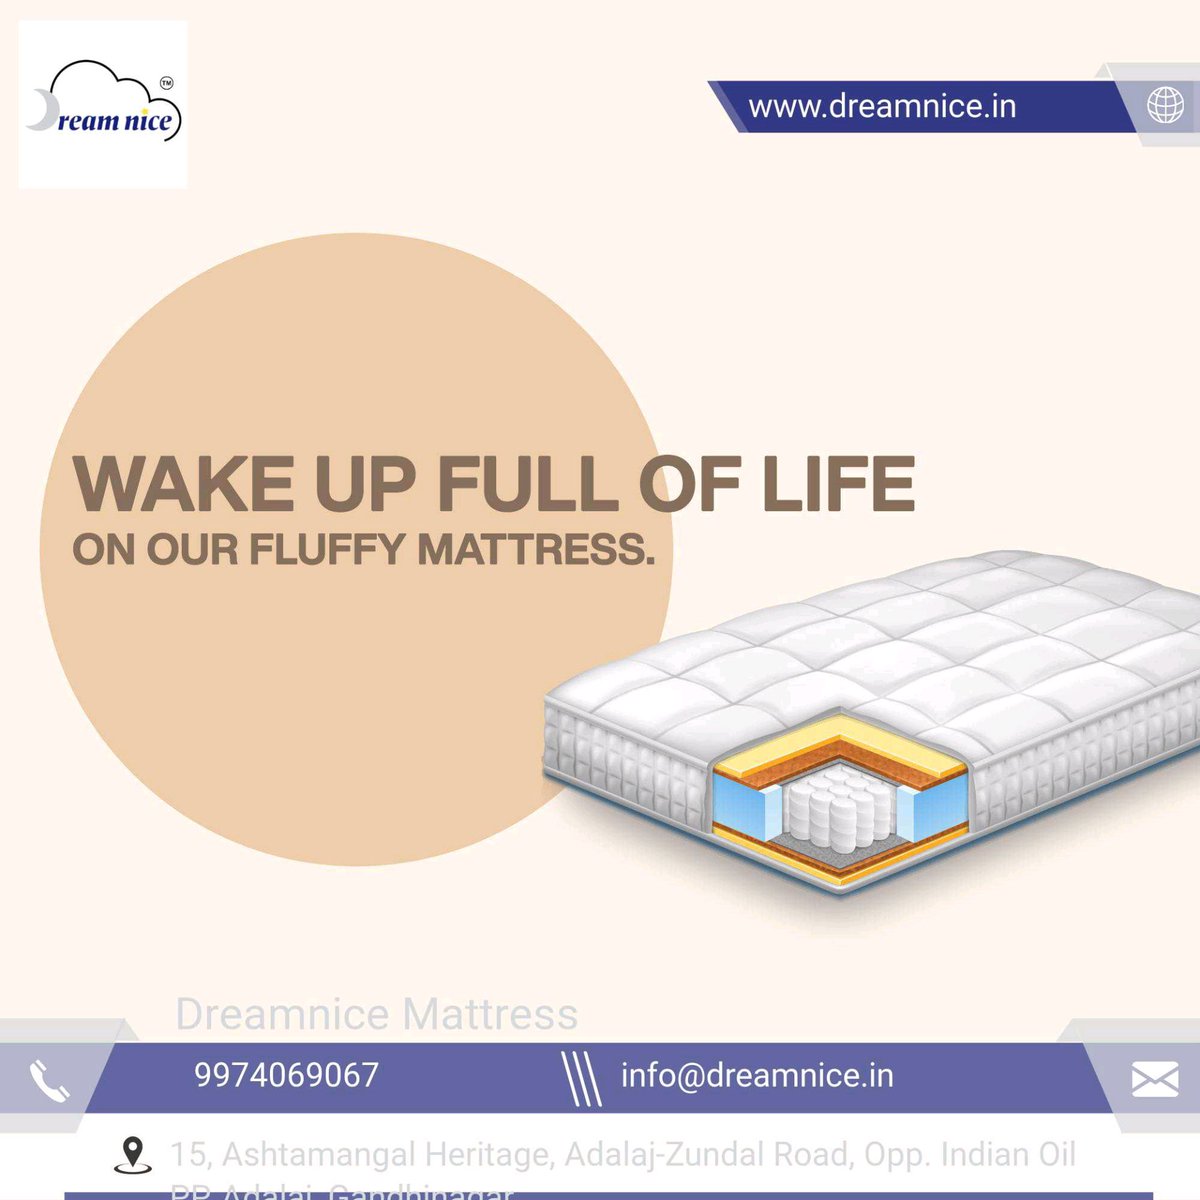 Wake up full of life on our fluffy mattress.

#sleep #plushmattresscompany #mattress #bed #dreamnicemattress #dreamnice 
#softmattress #onlinemattress #mattressstore #qualitymattress #bestmattress #brandedmattress #mattressbrand